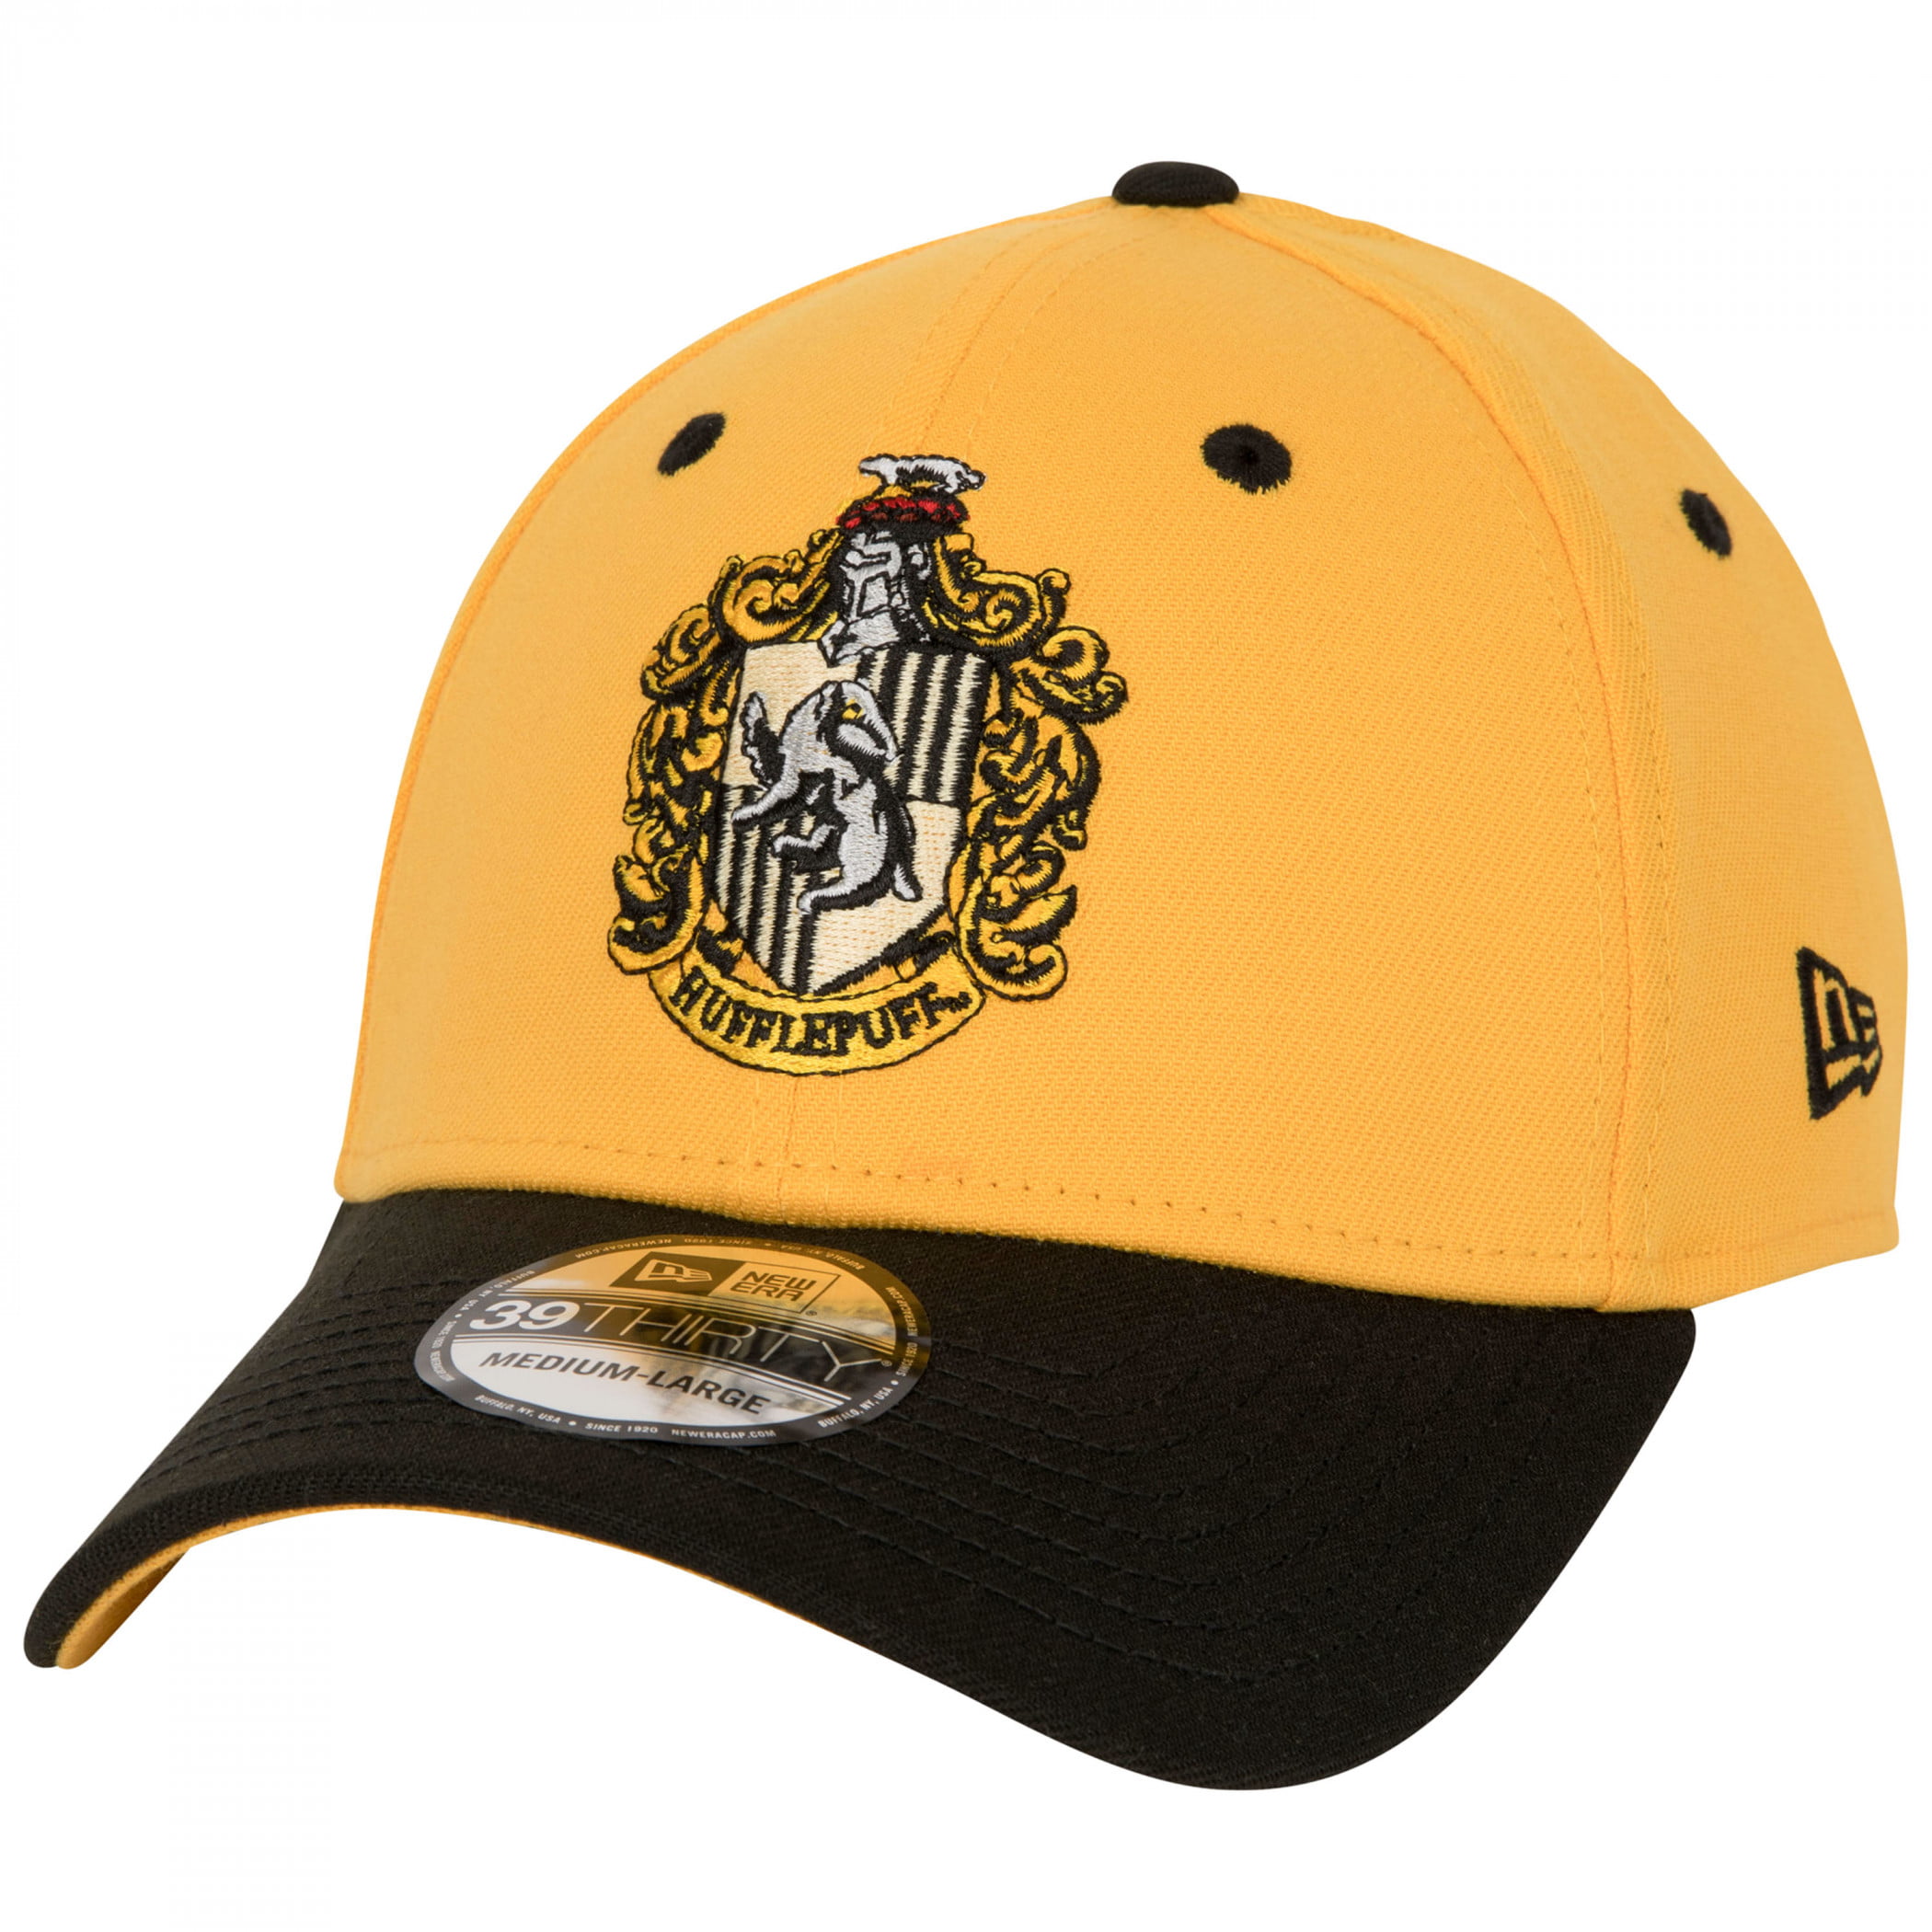 Harry Potter New Fitted Hat-Small/Medium 39Thirty Crest Era Hufflepuff